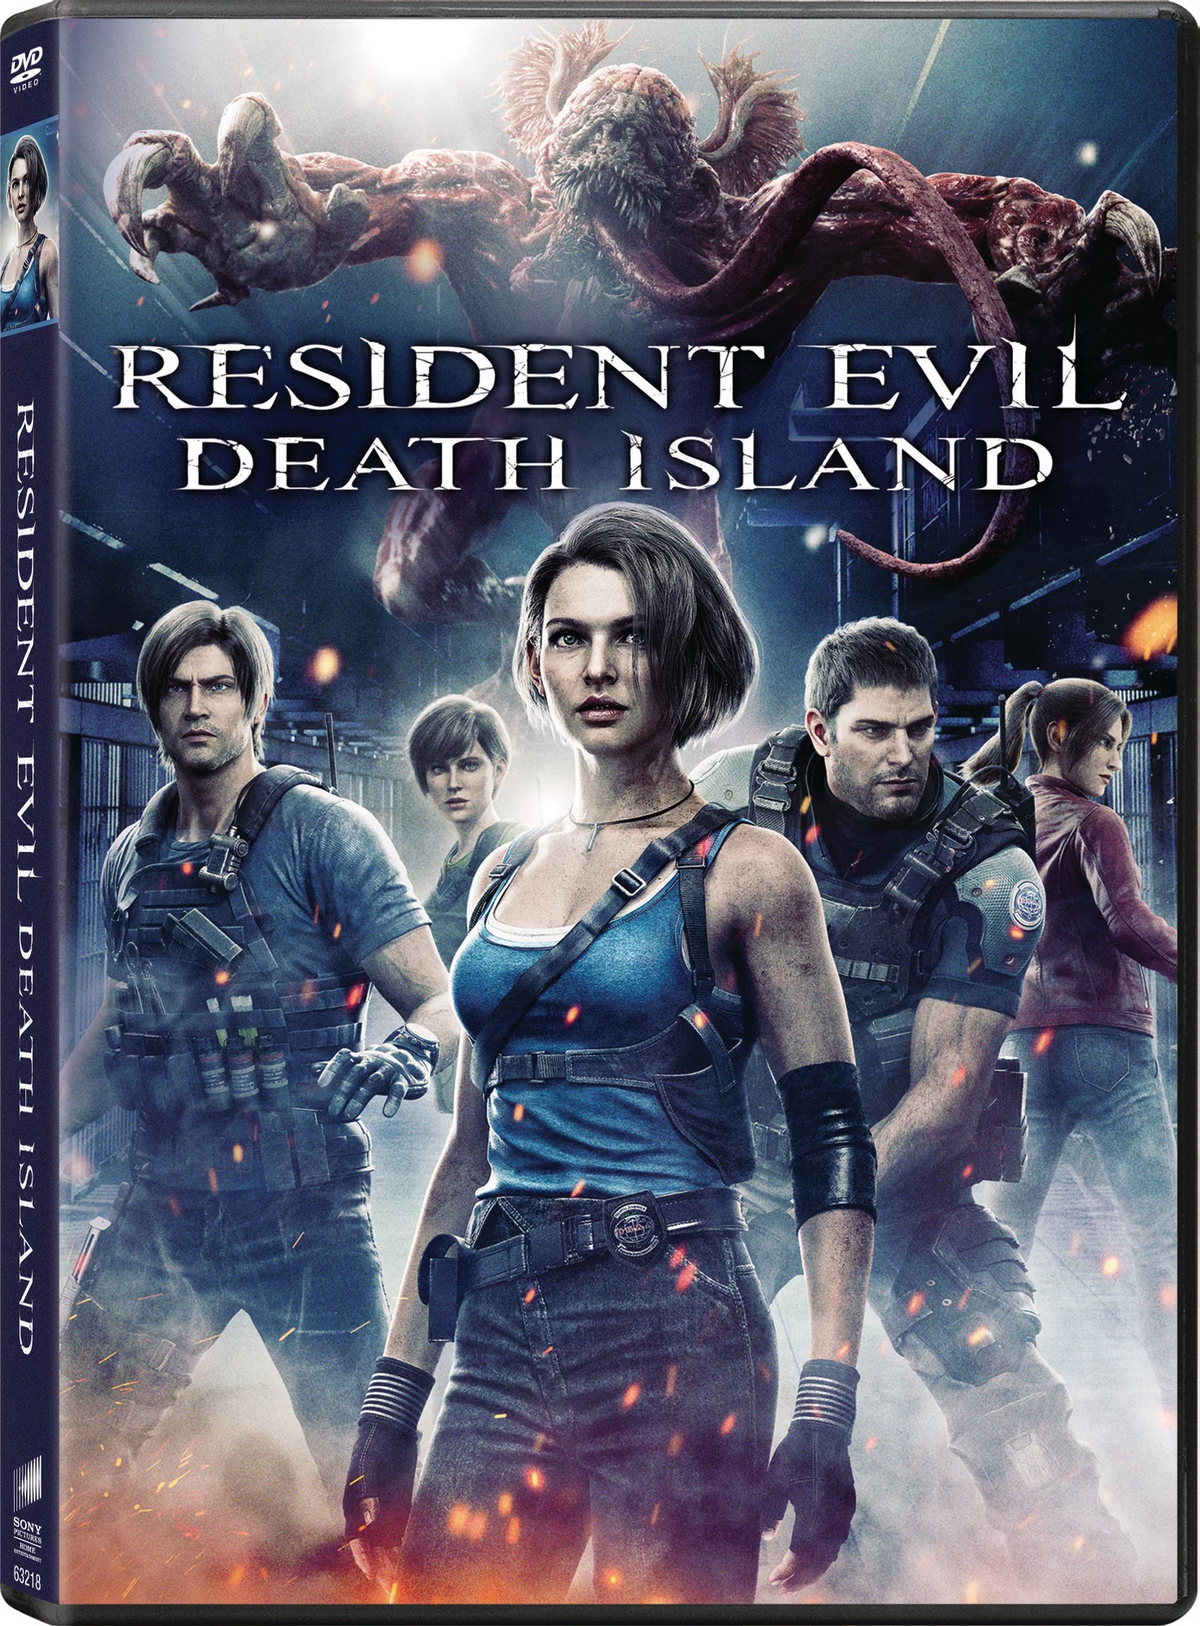 Resident Evil Zero - Wikipedia